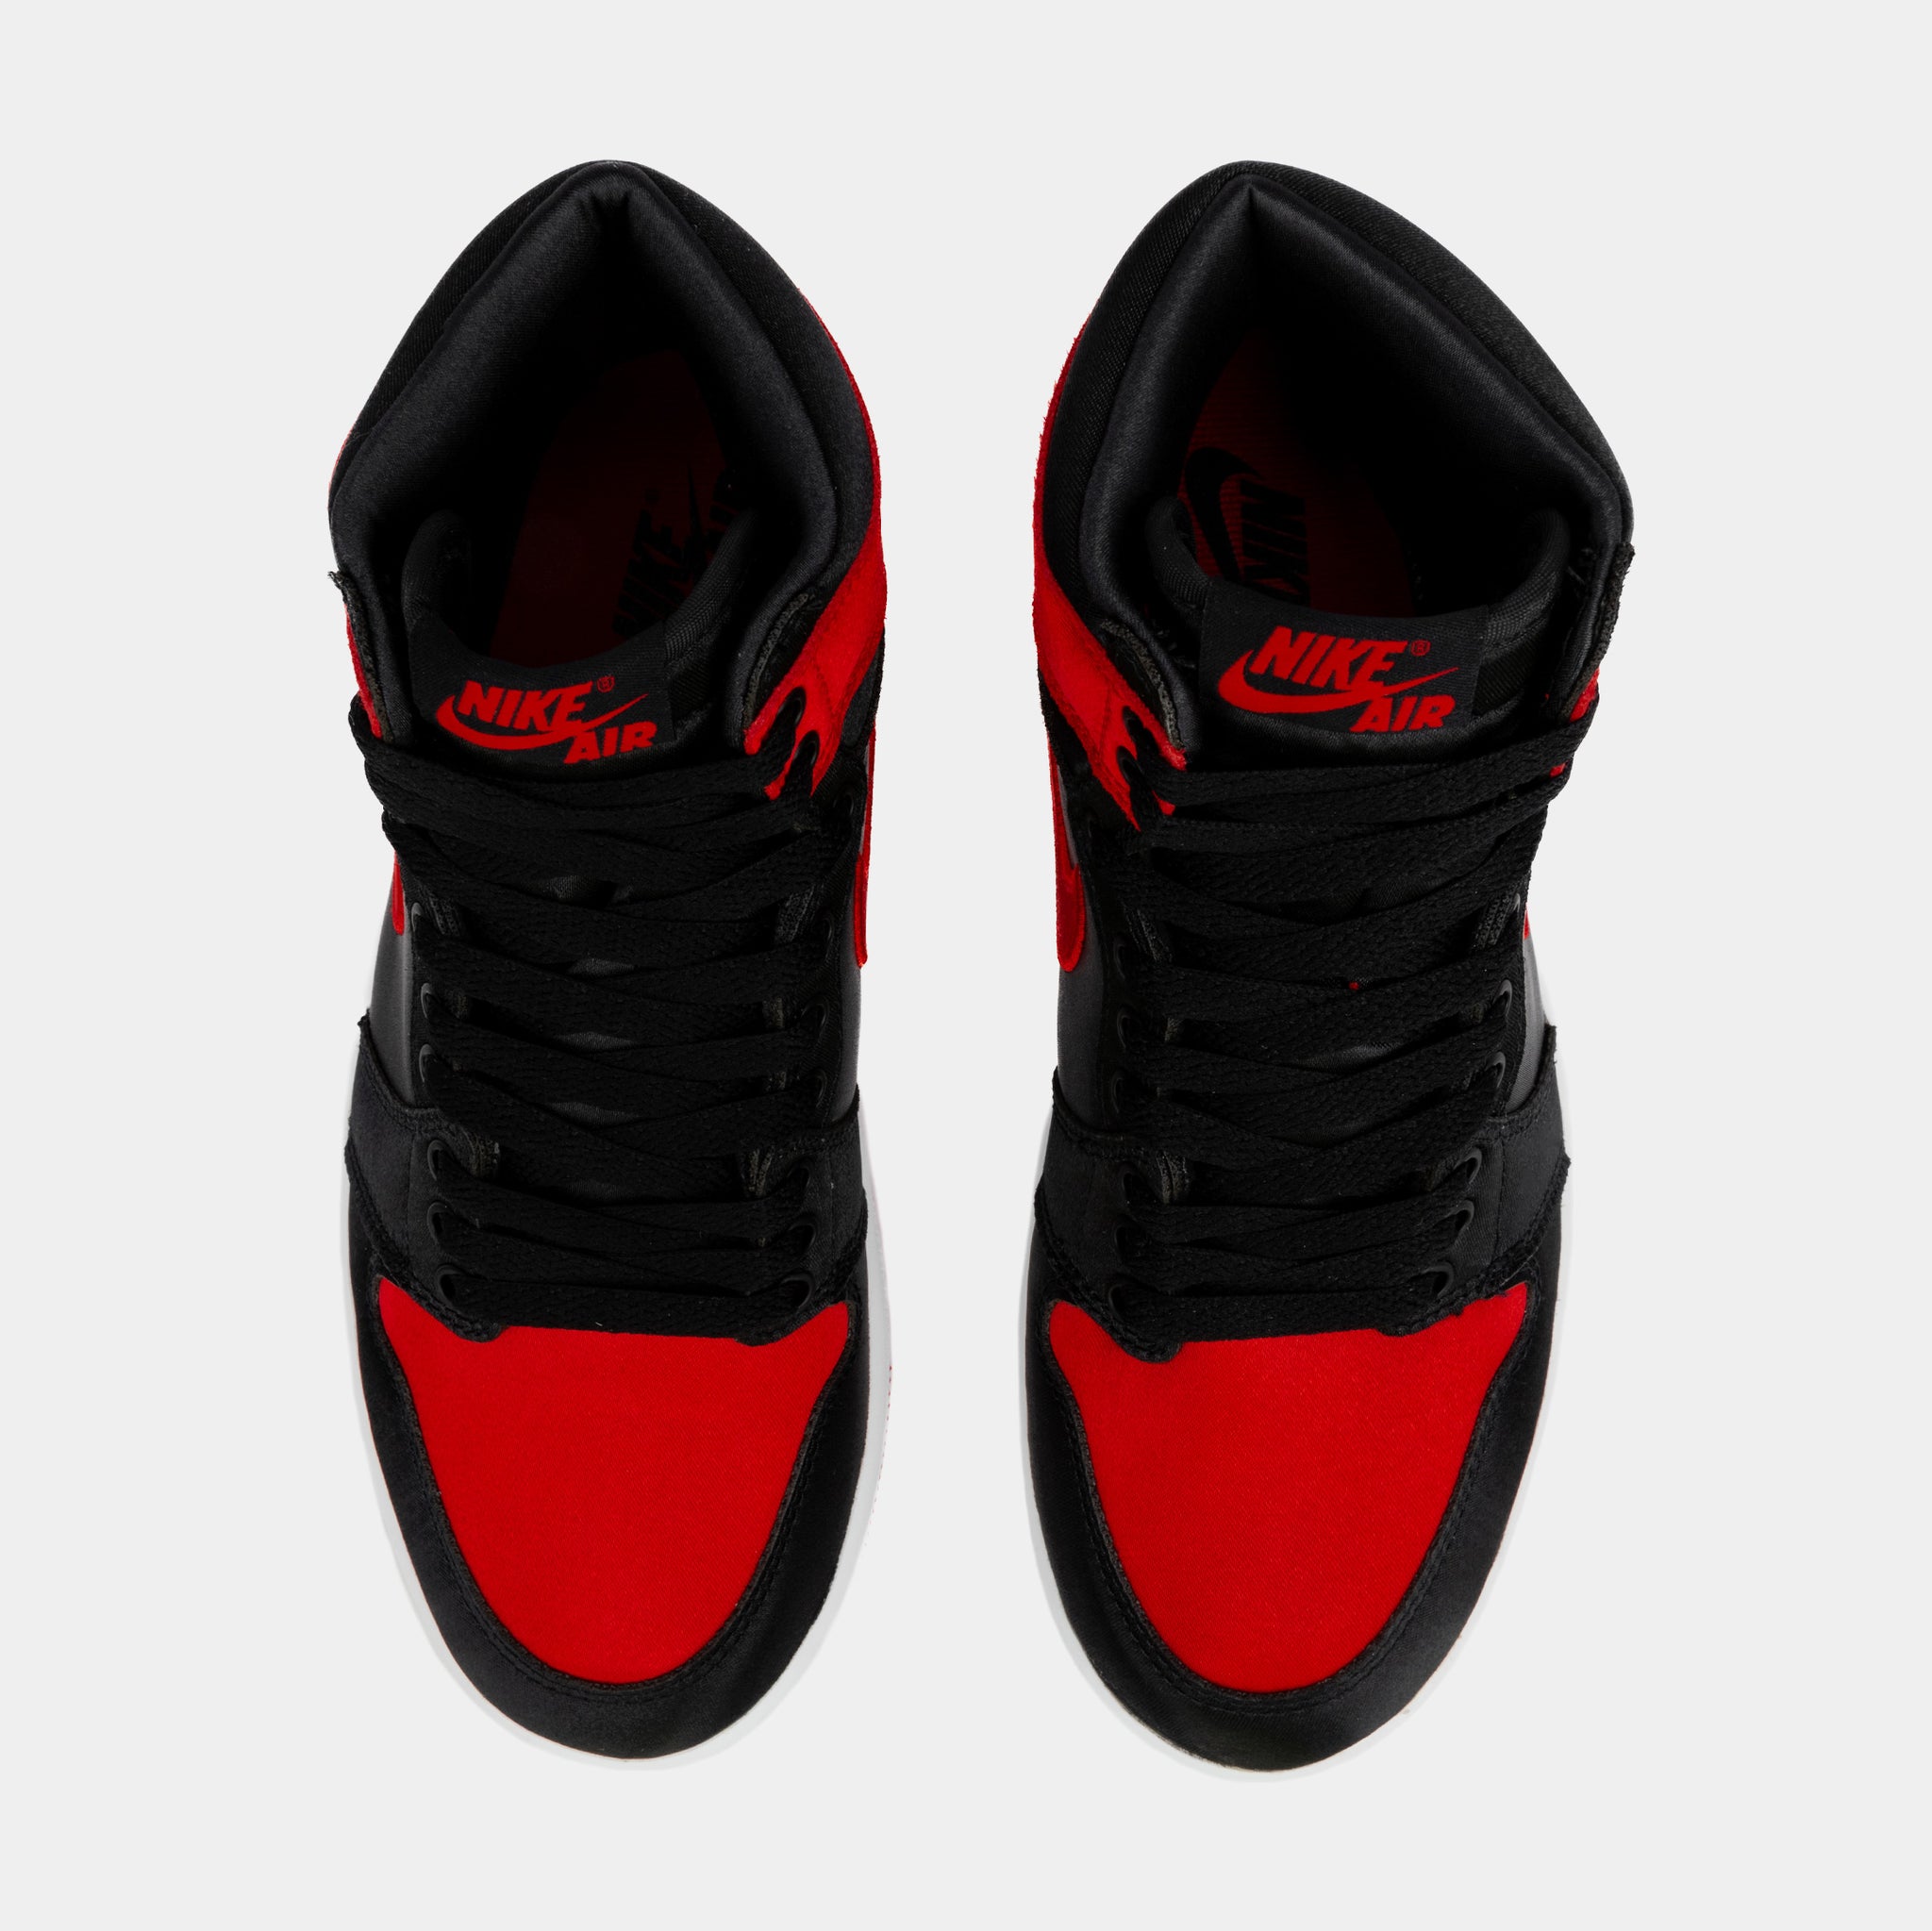 Jordan Air Jordan 1 Retro Hi OG Satin Bred Womens Lifestyle Shoes Black ...